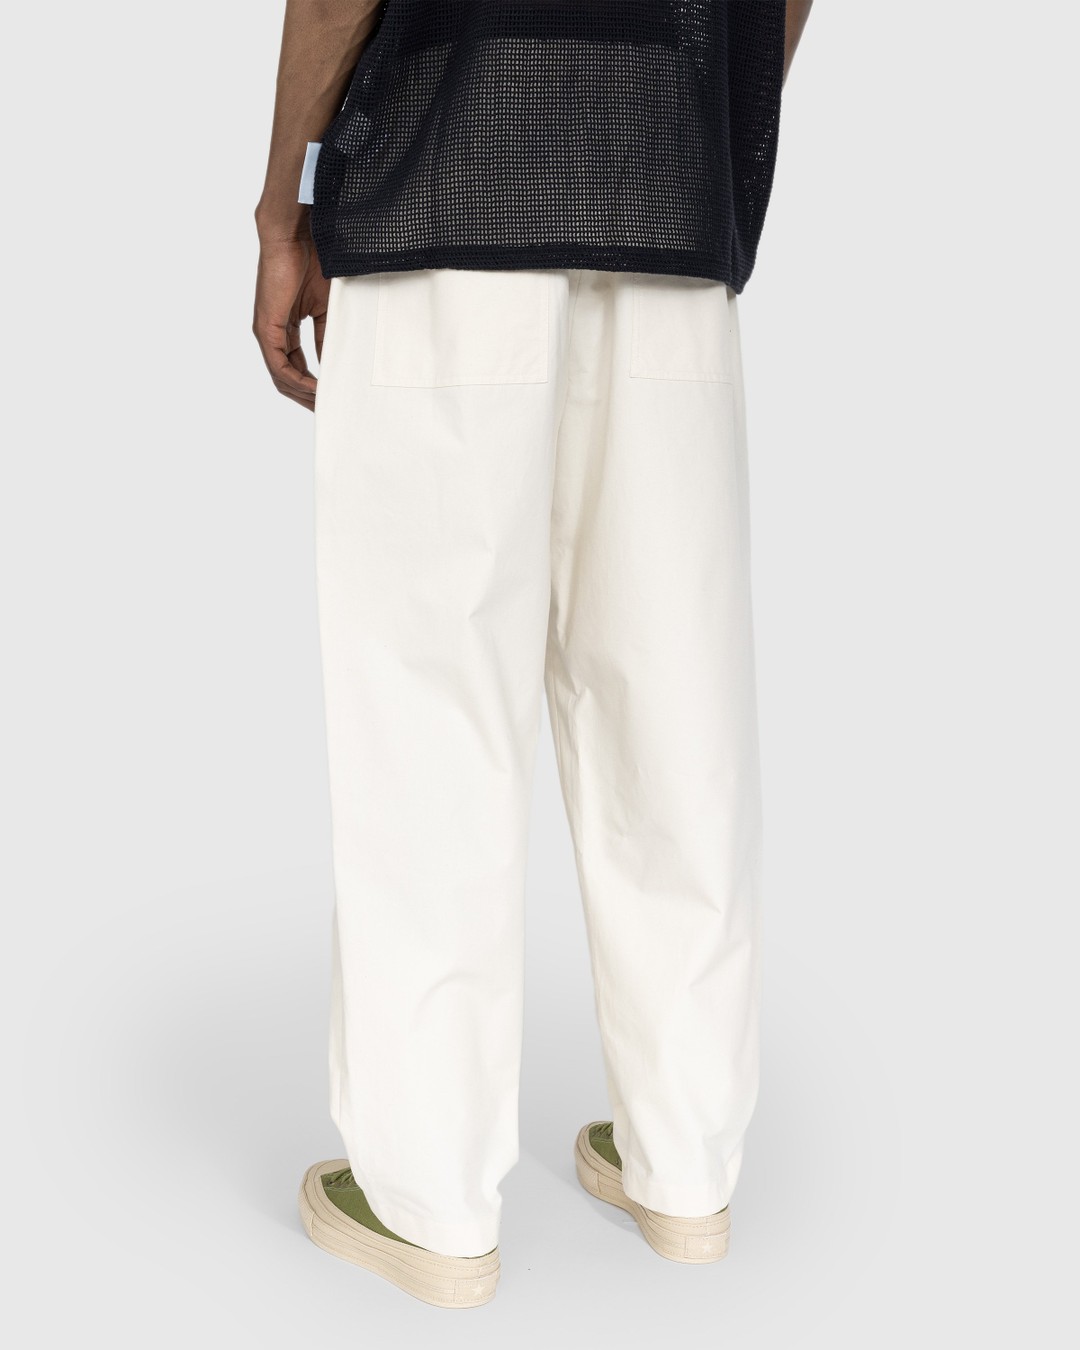 Jil Sander – Cropped Straight Leg Trousers Beige - Pants - Beige - Image 3